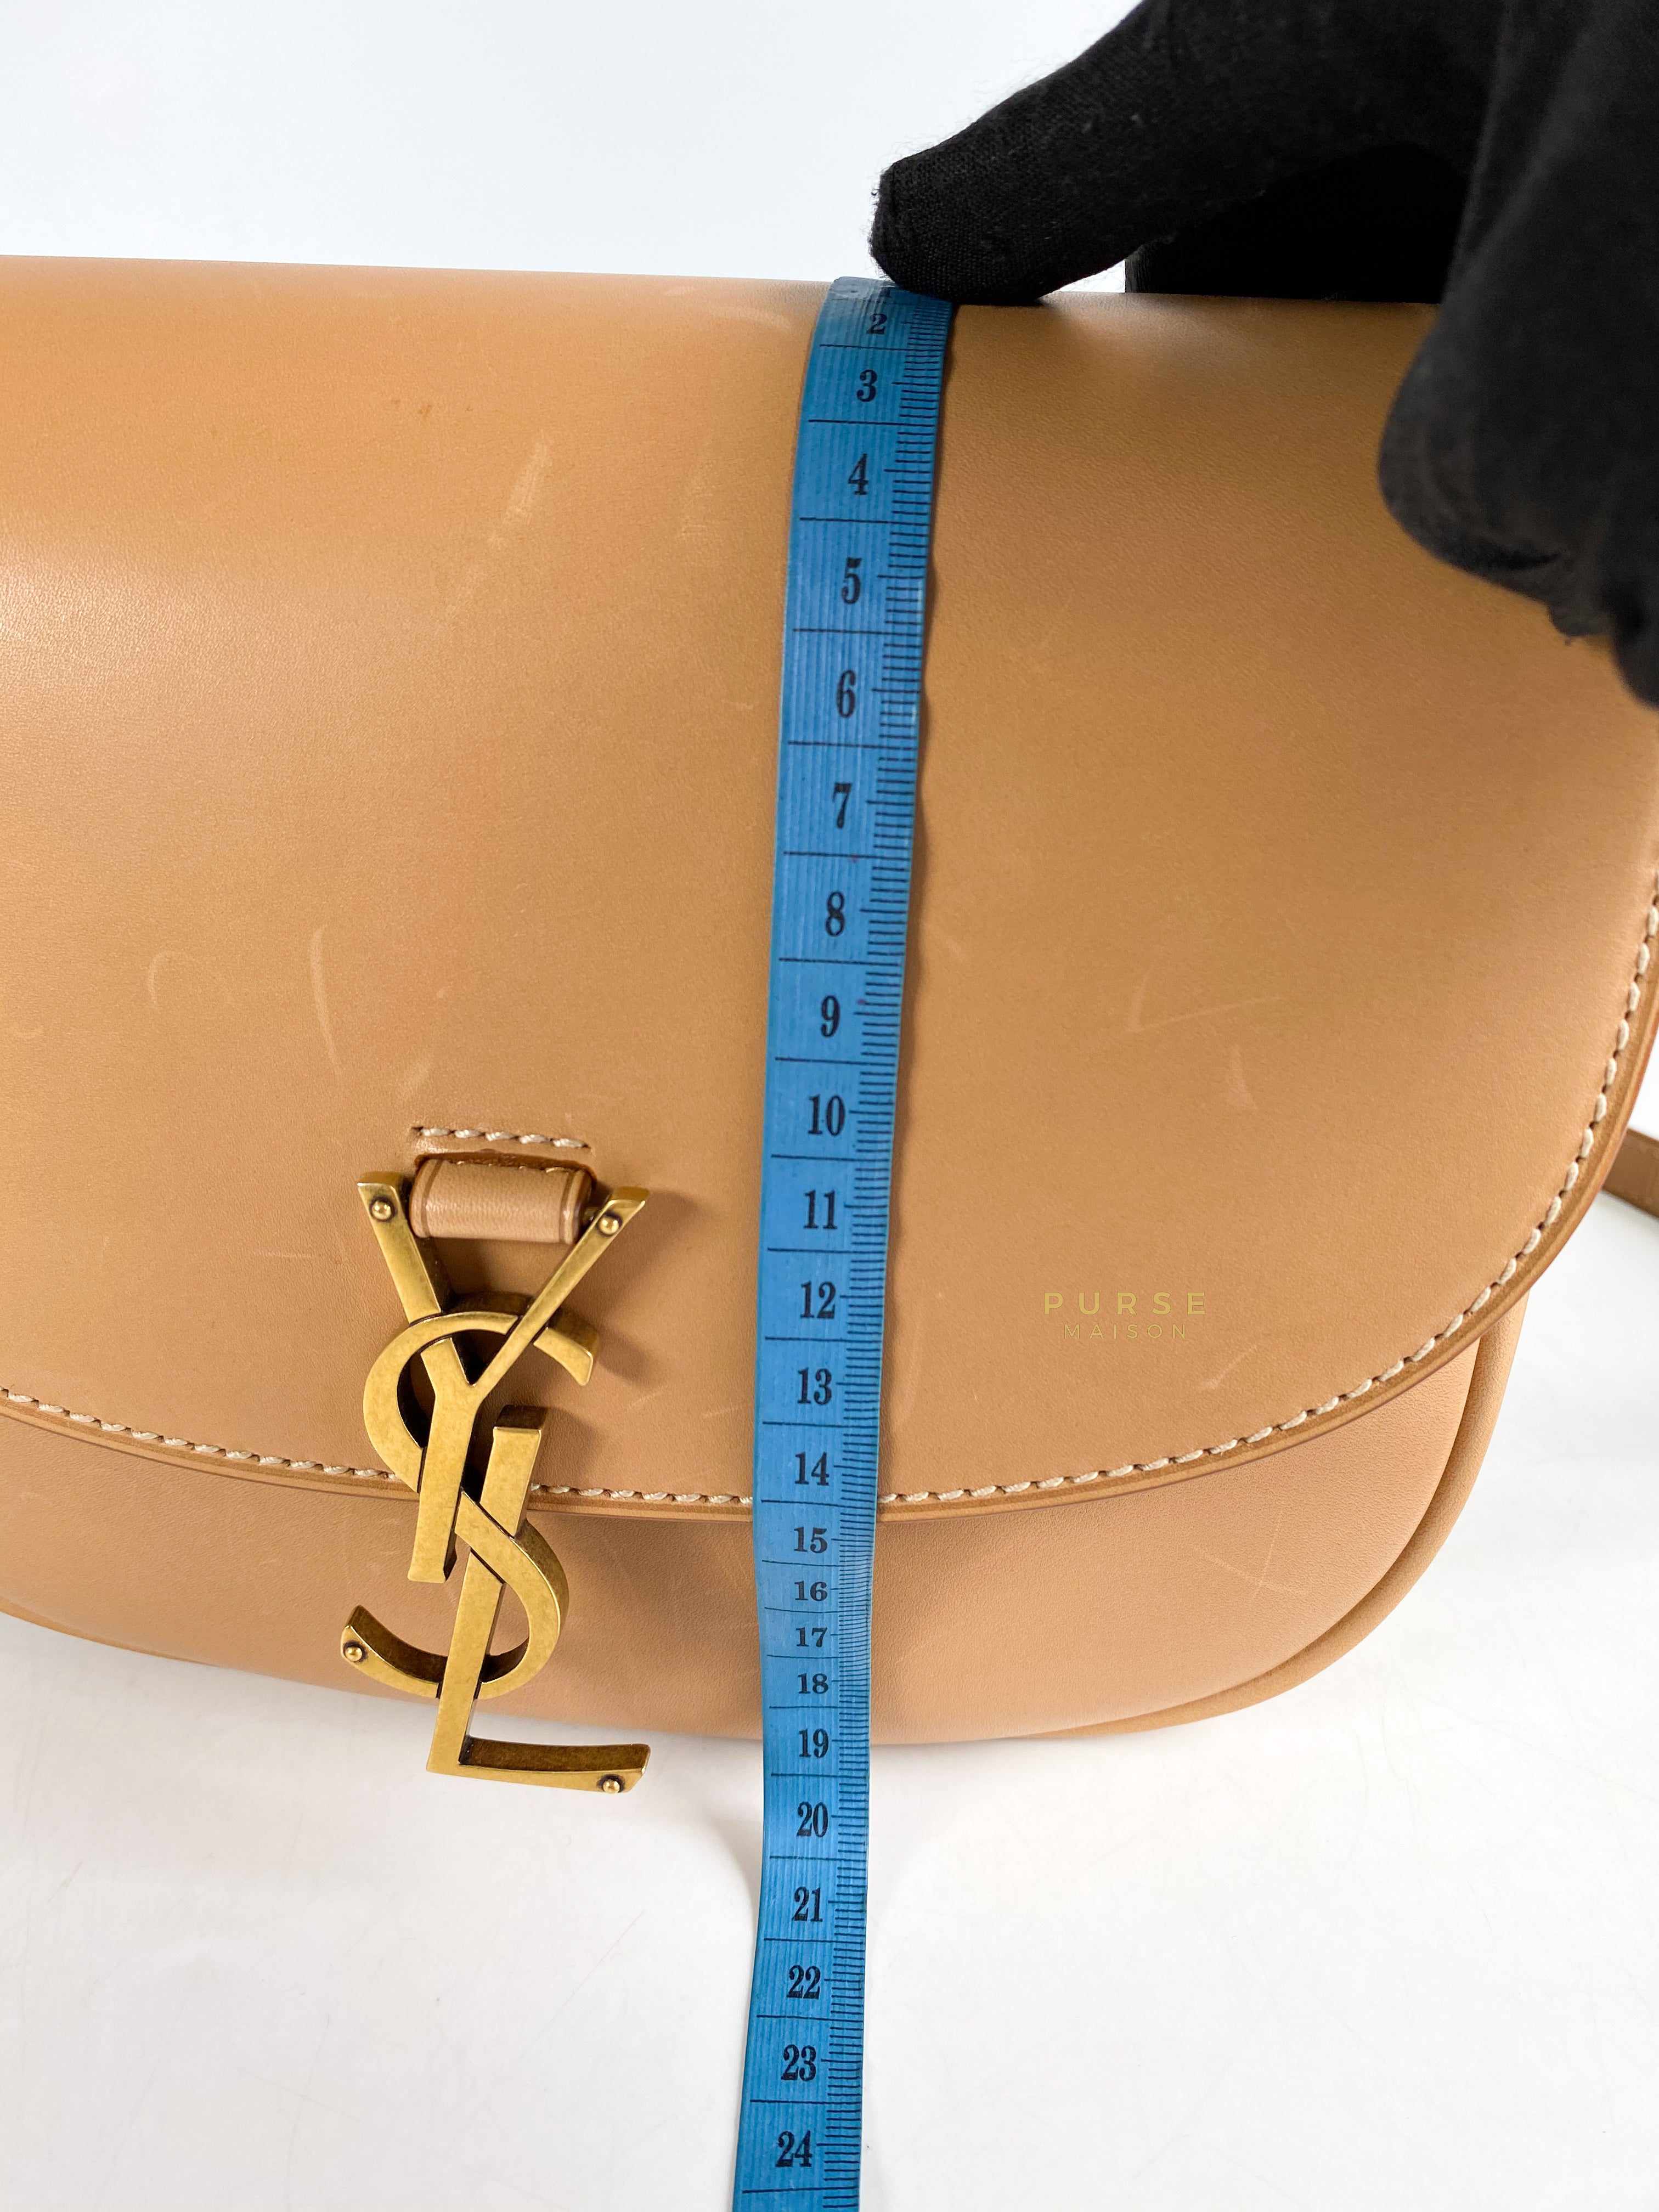 YSL Monogram Kaia Medium Dark Beige Leather Bag and Gold Hardware